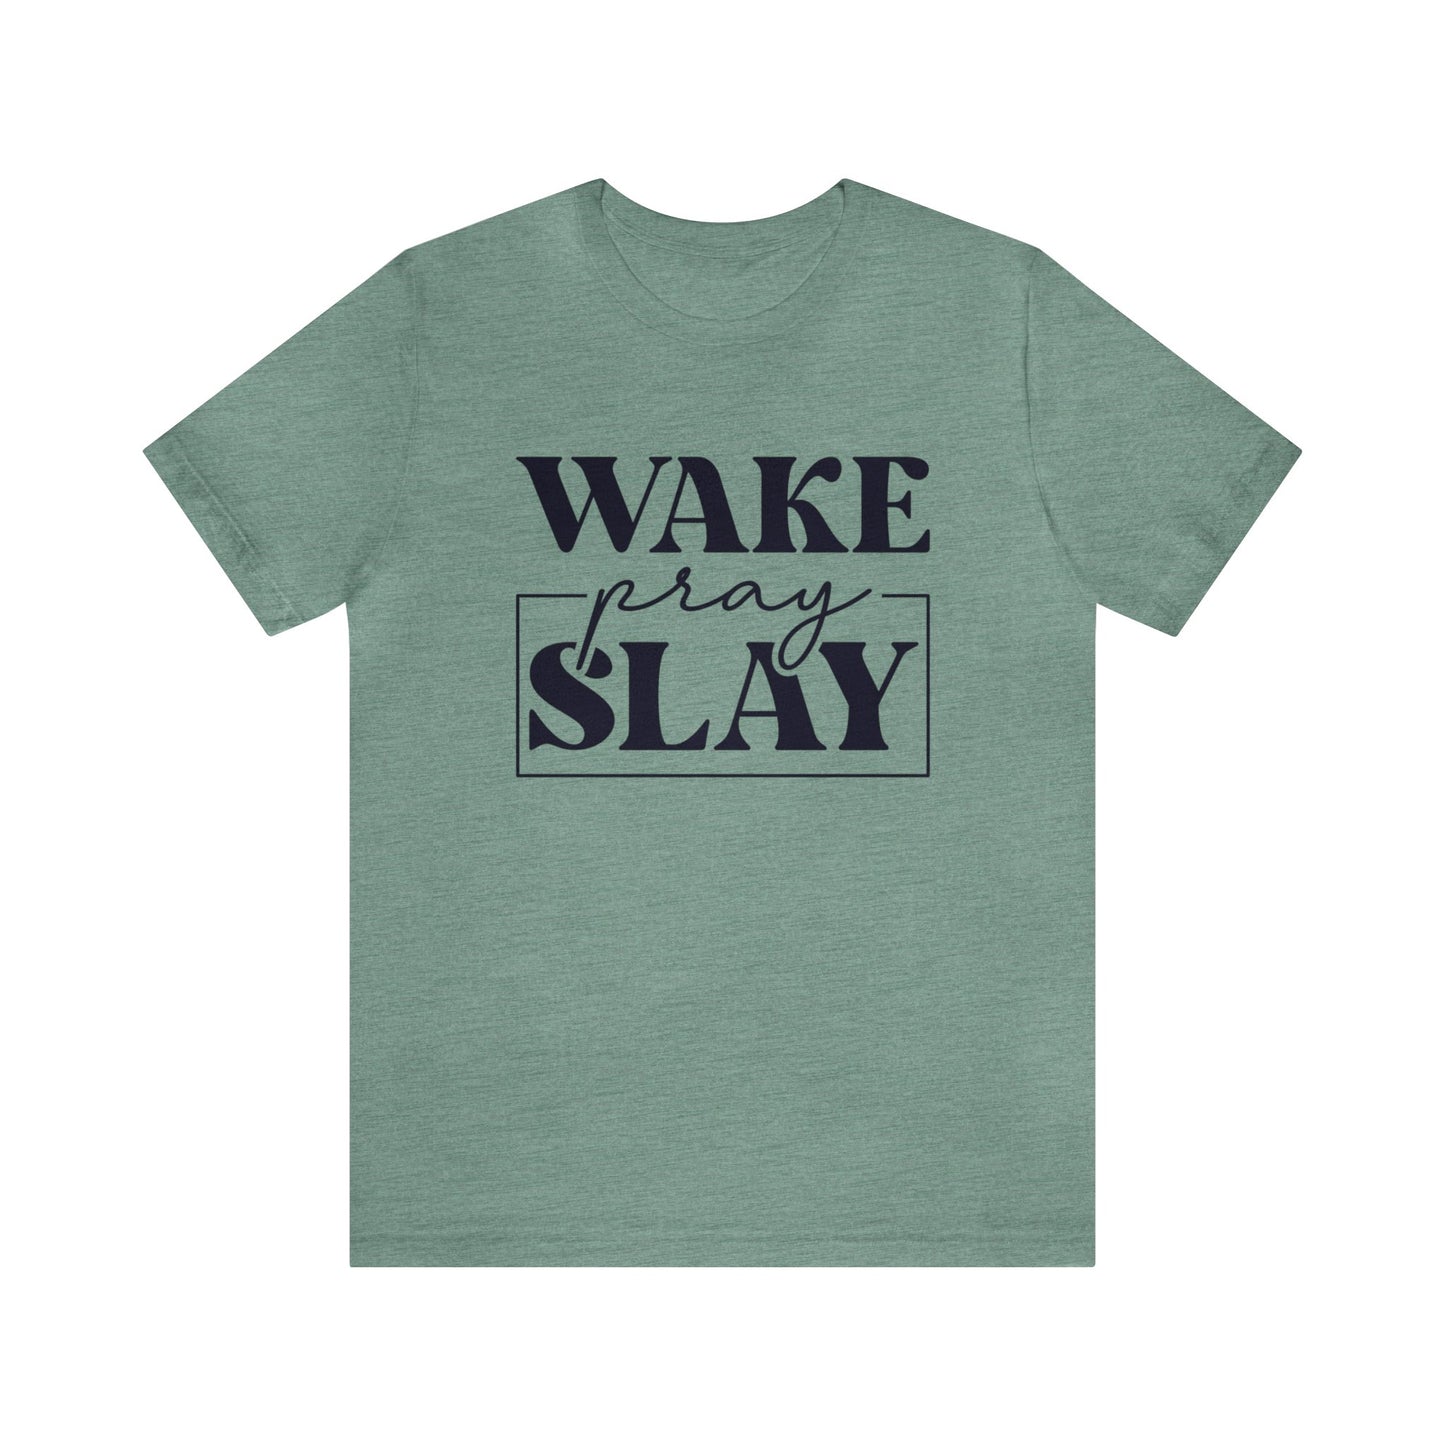 Wake Slay Pray Women's Short Sleeve Tee